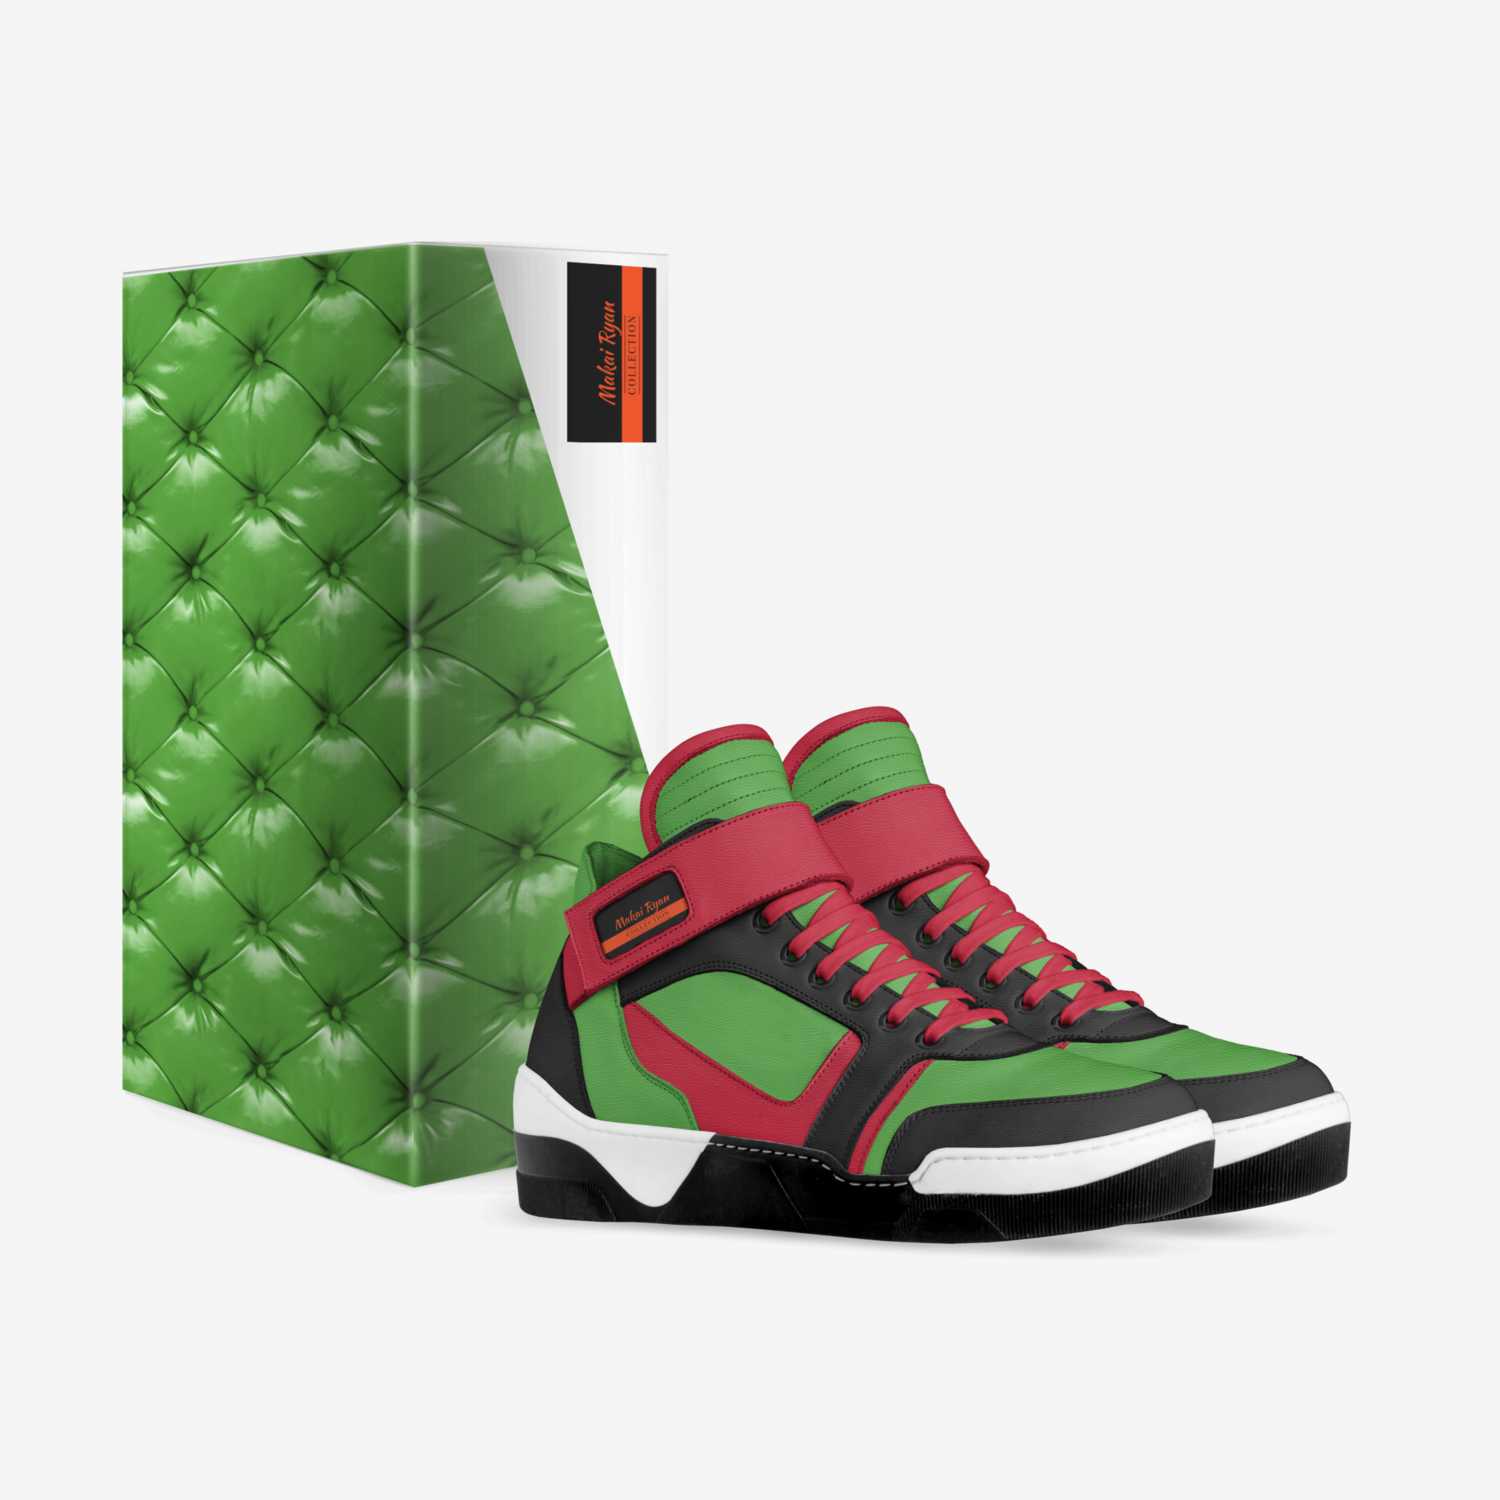 Makai Ryan custom made in Italy shoes by Edward Gleason | Box view